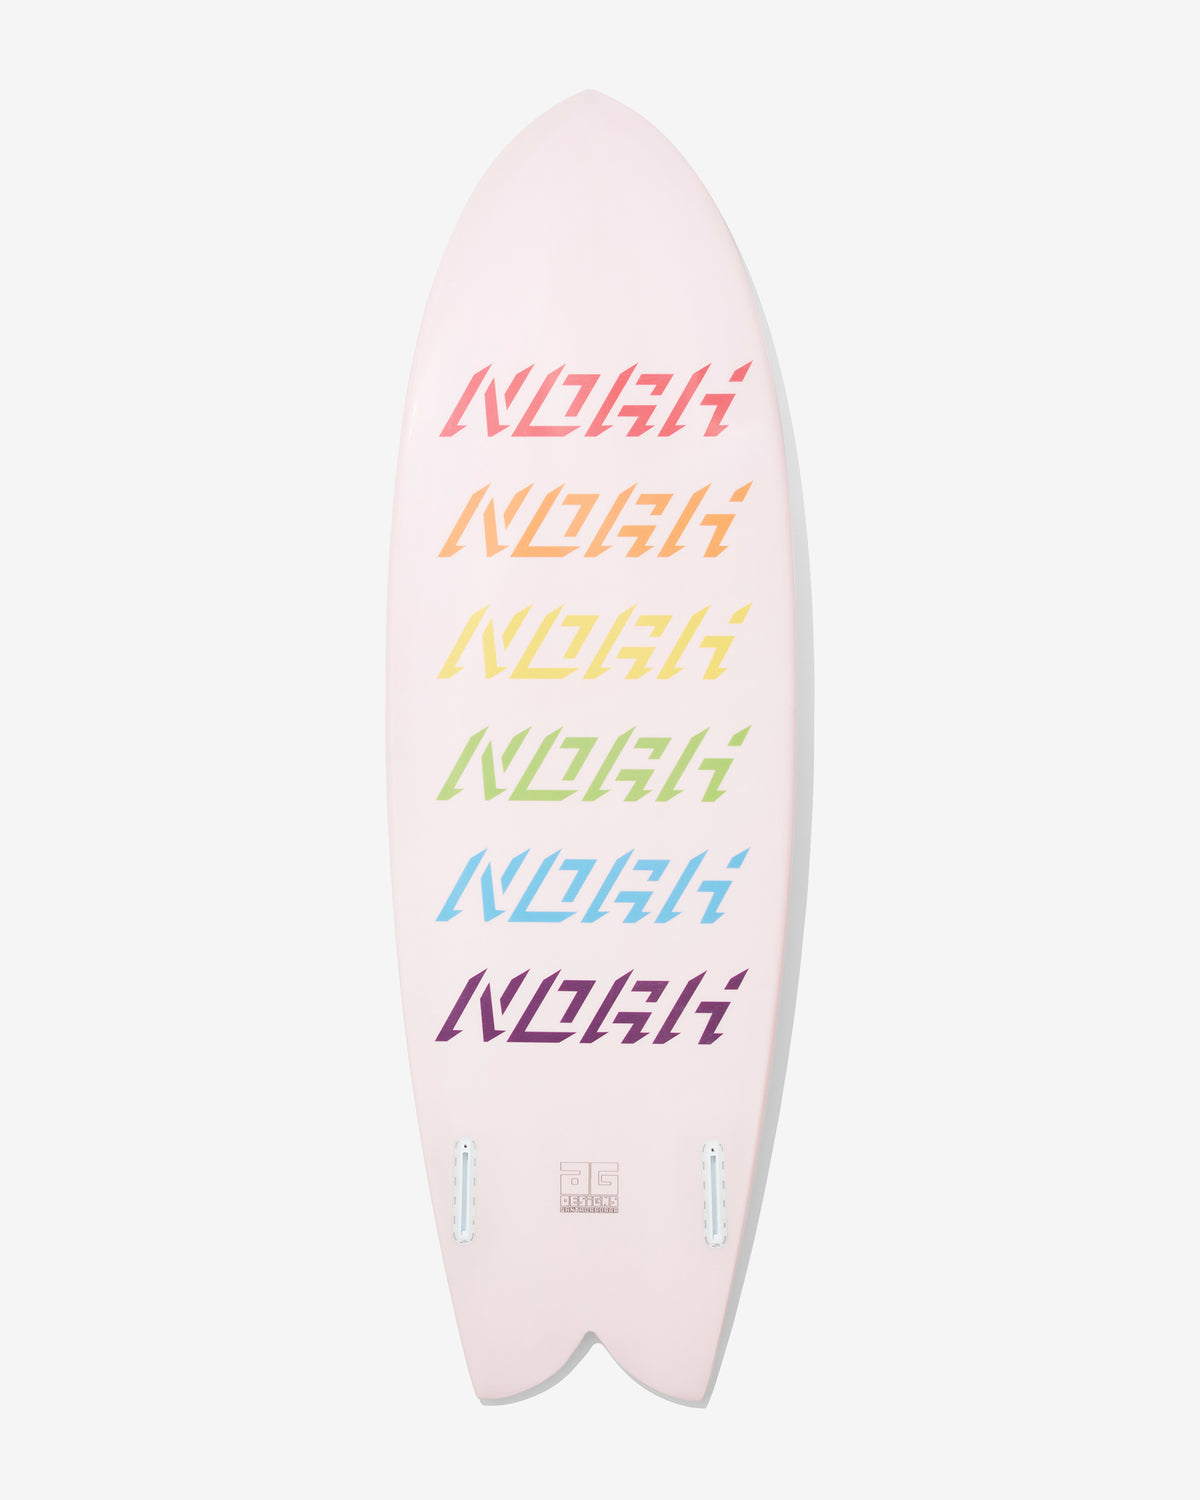 AO Surfboard